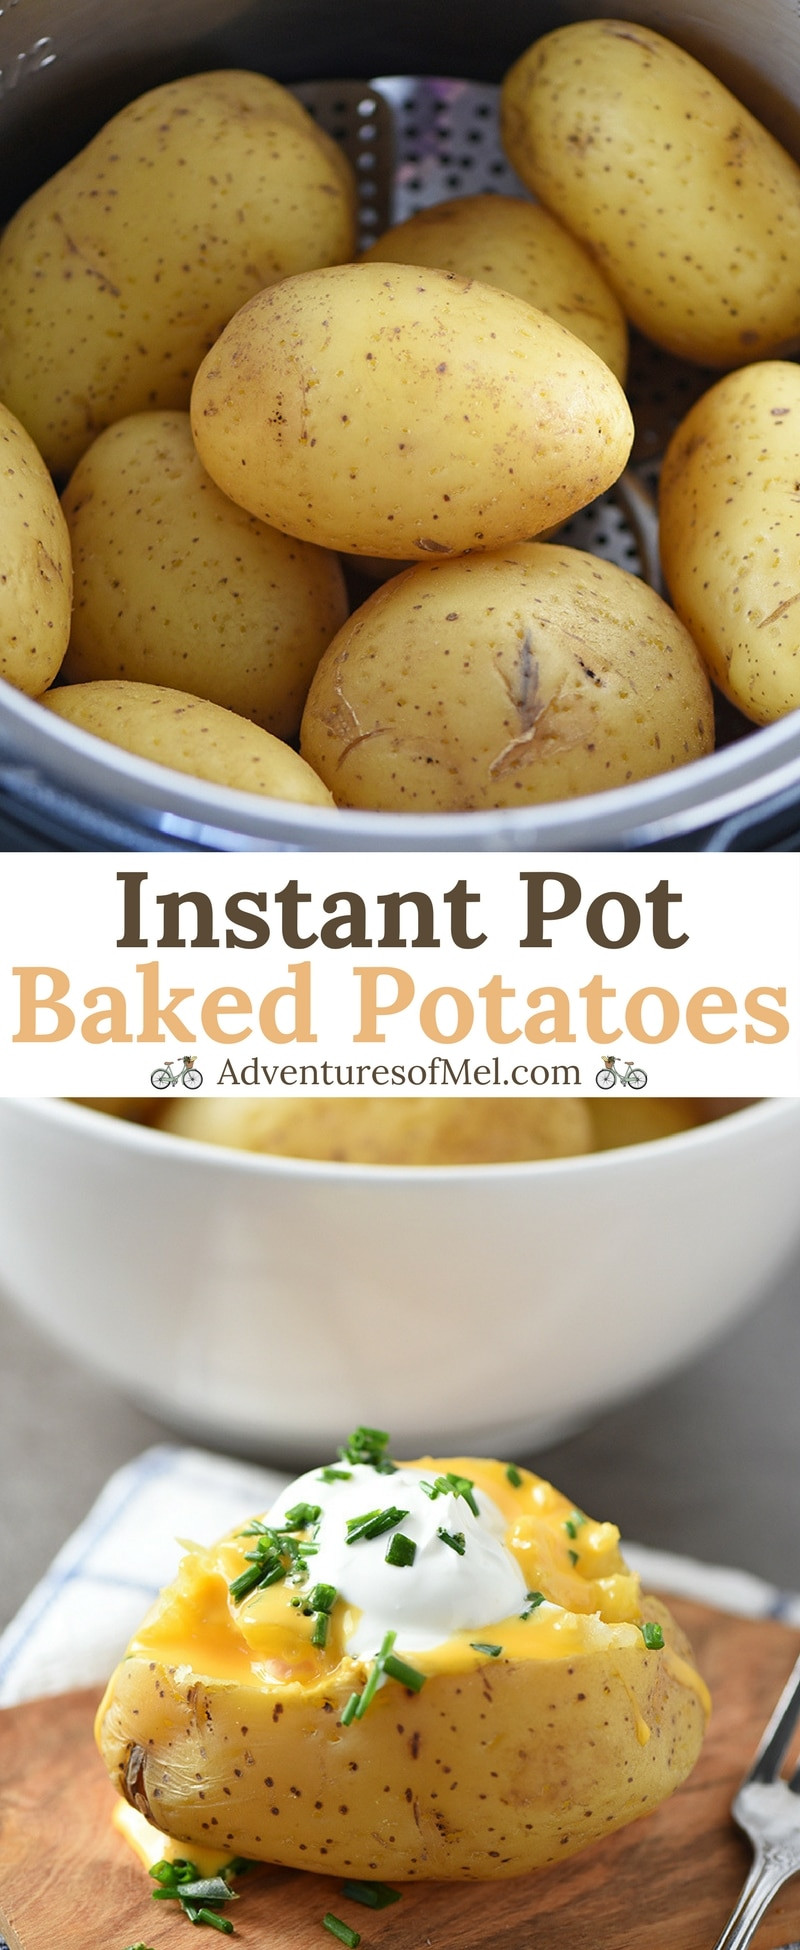 Baked Potato In Instant Pot
 Instant Pot Baked Potatoes Adventures of Mel